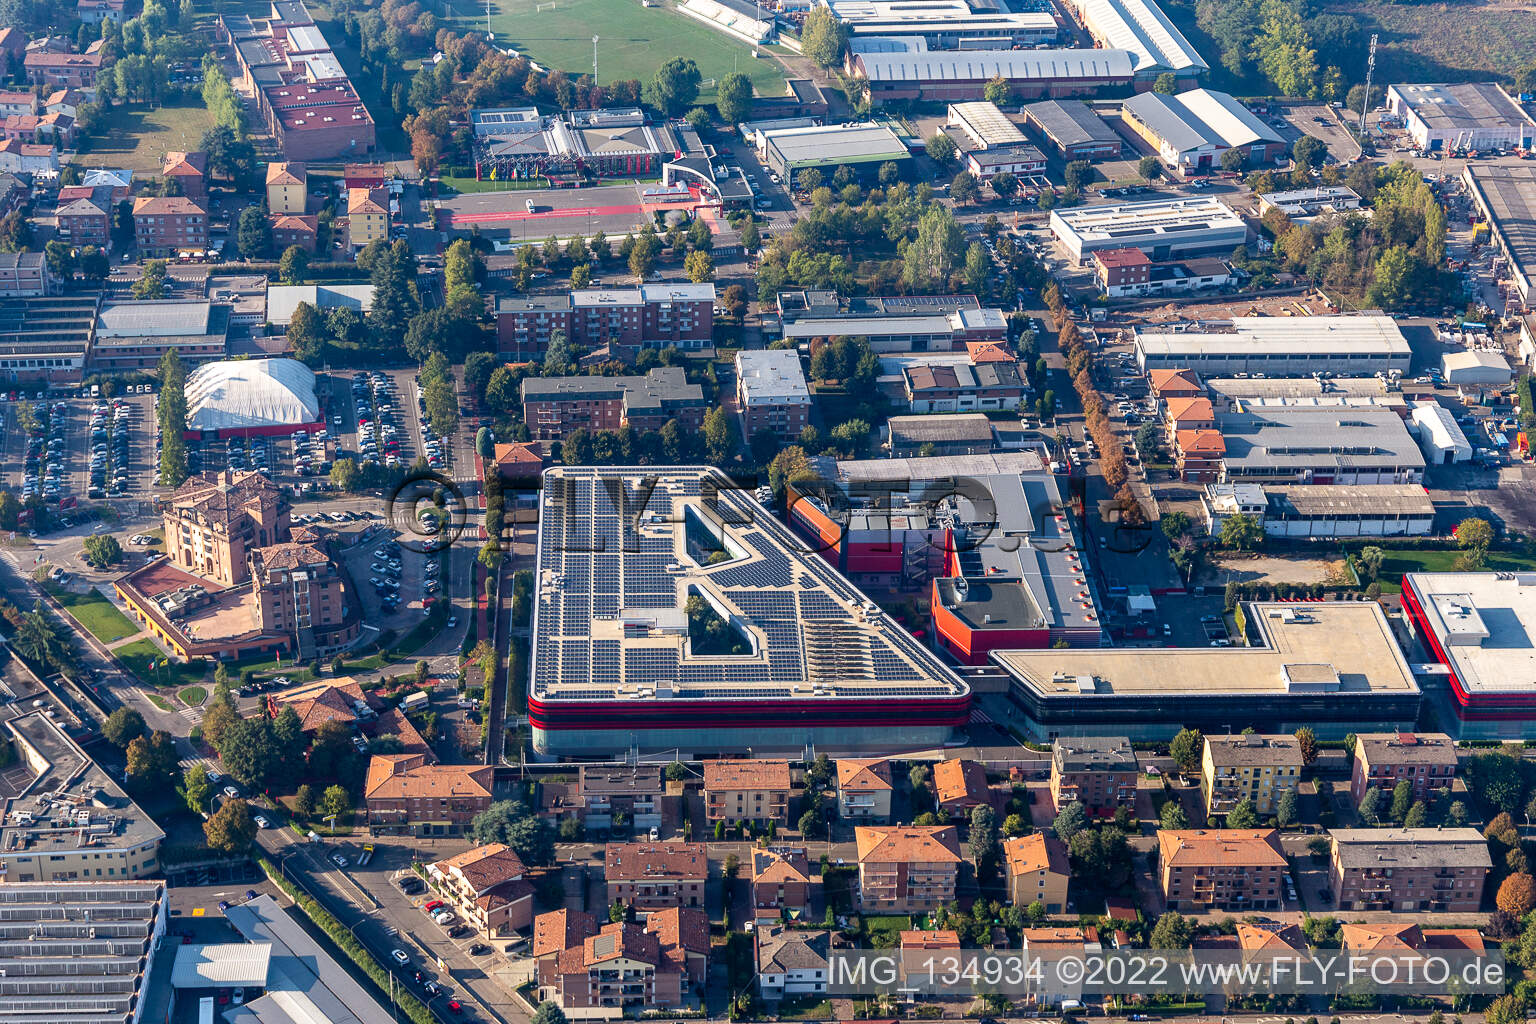 Luftaufnahme von Ferrari S.P.A in Maranello im Bundesland Modena, Italien